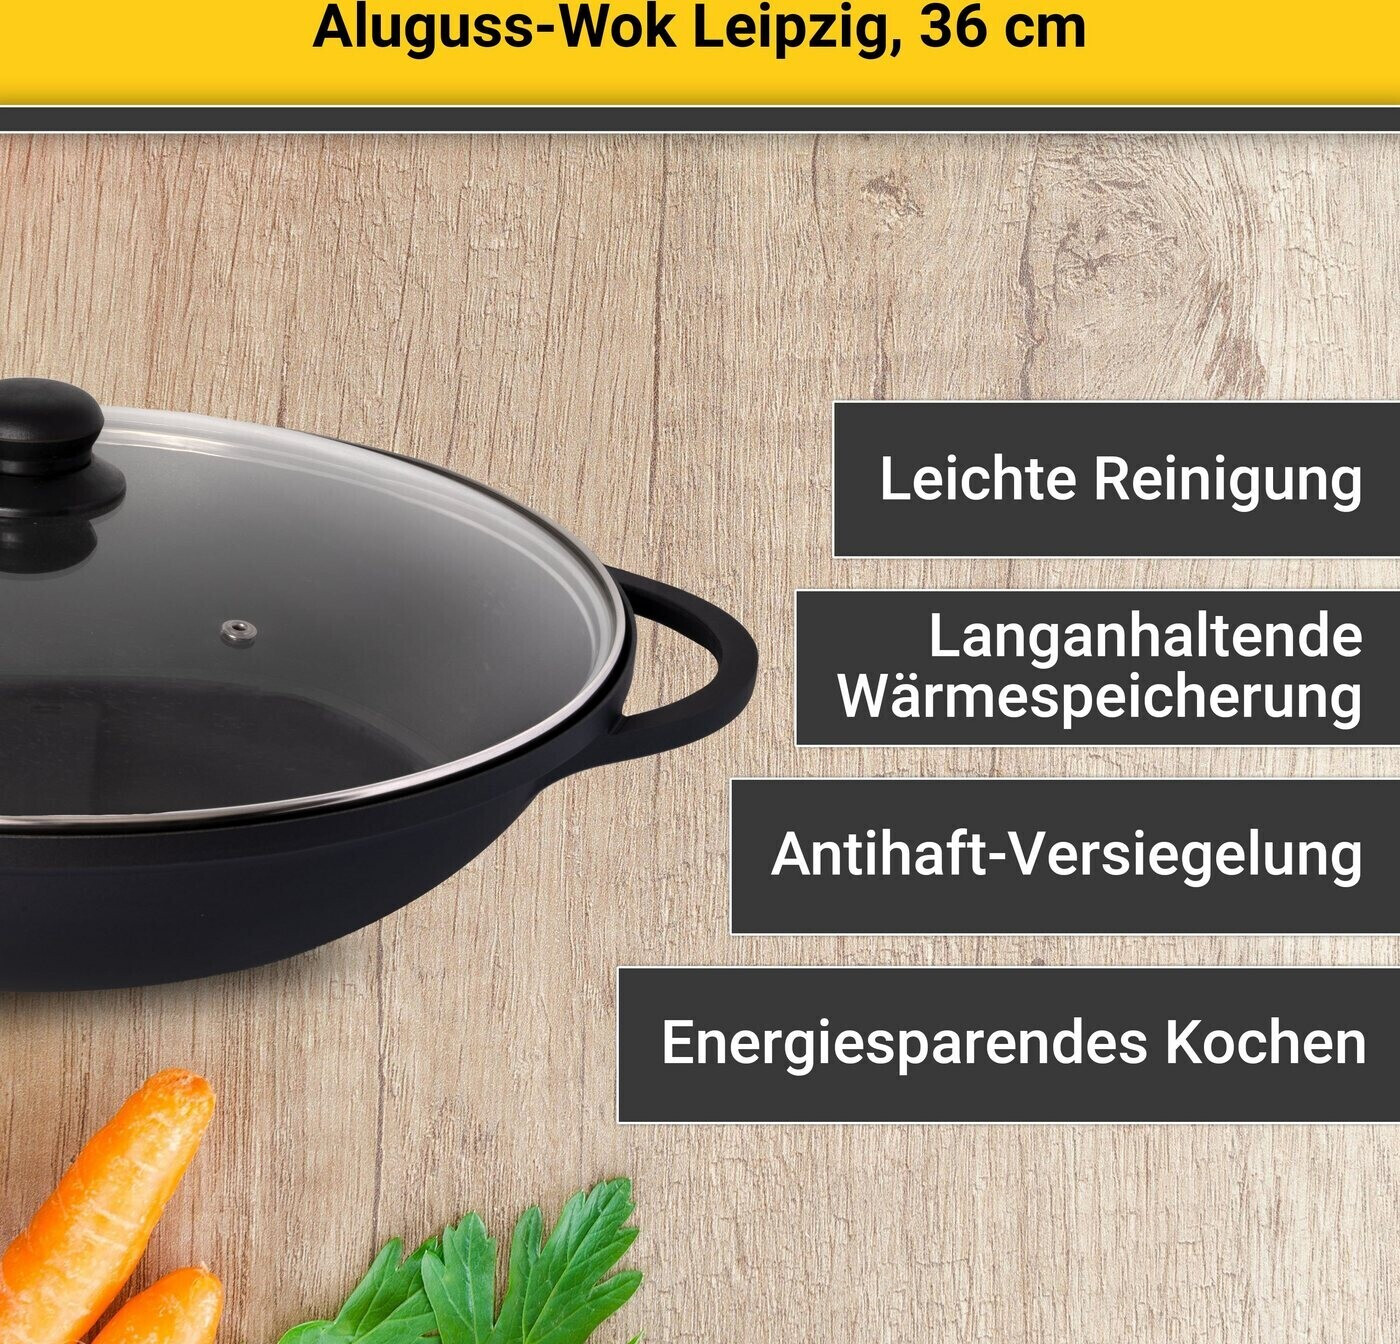 € Preisvergleich Krüger Leipzig 36 Aluguss-Wok ab 45,00 bei cm |